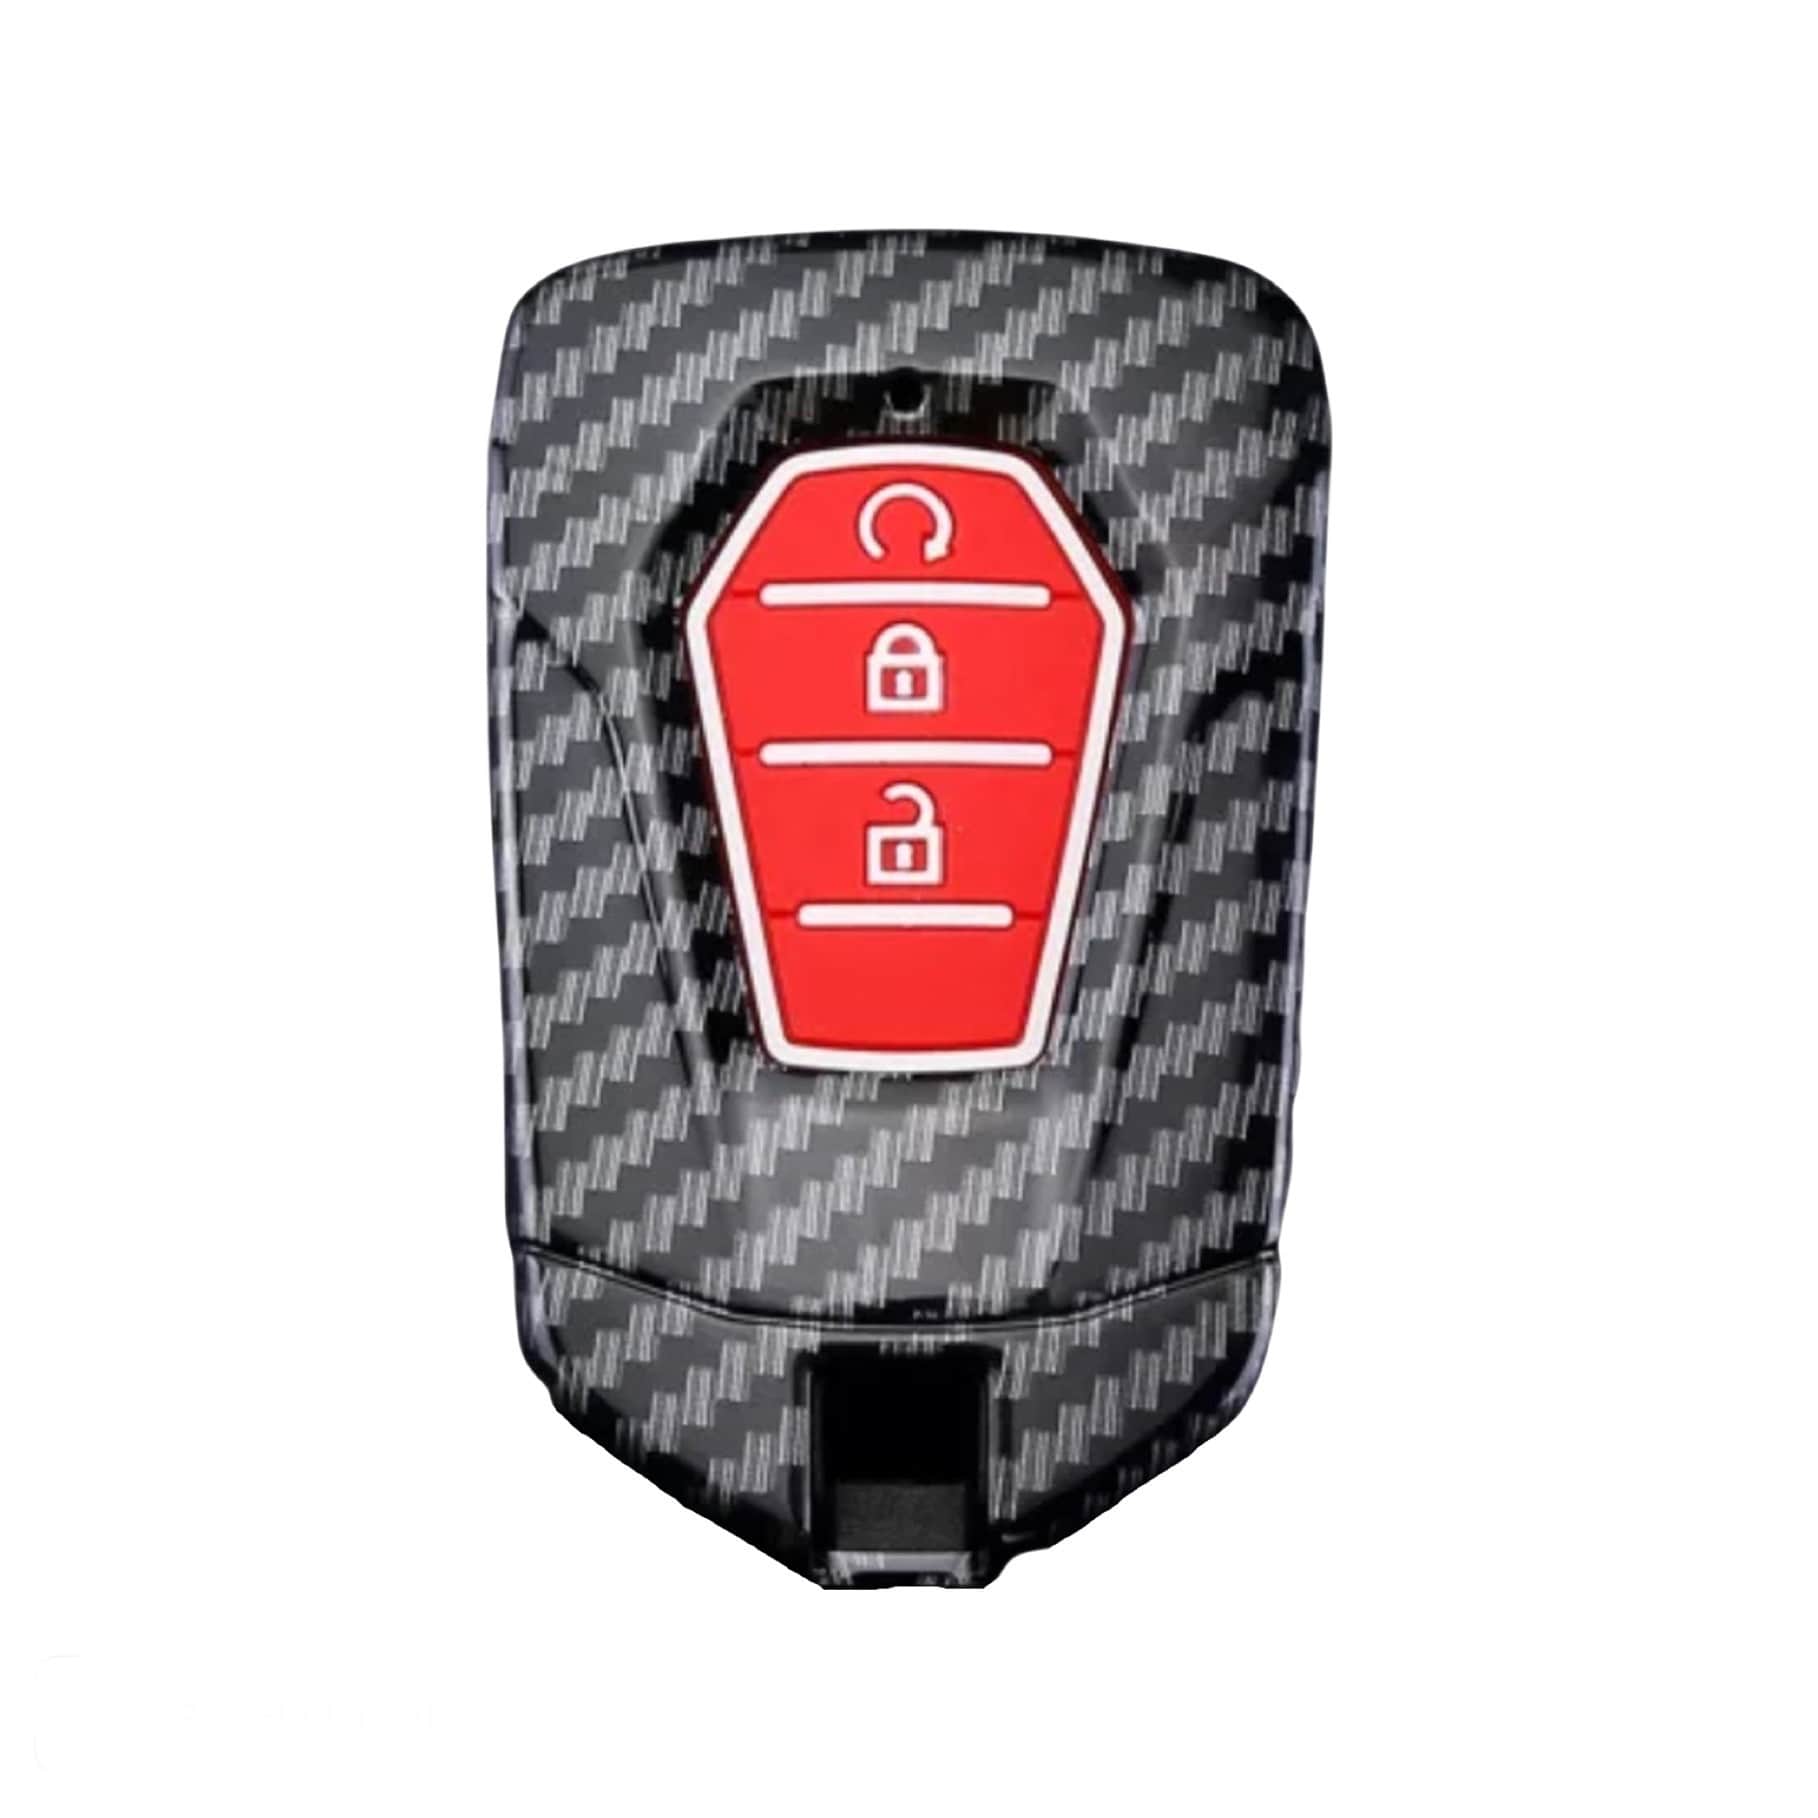 Isuzu Key cover carbon fibre red | D-Max and MU-X | Isuzu accessories - Keysleeves 